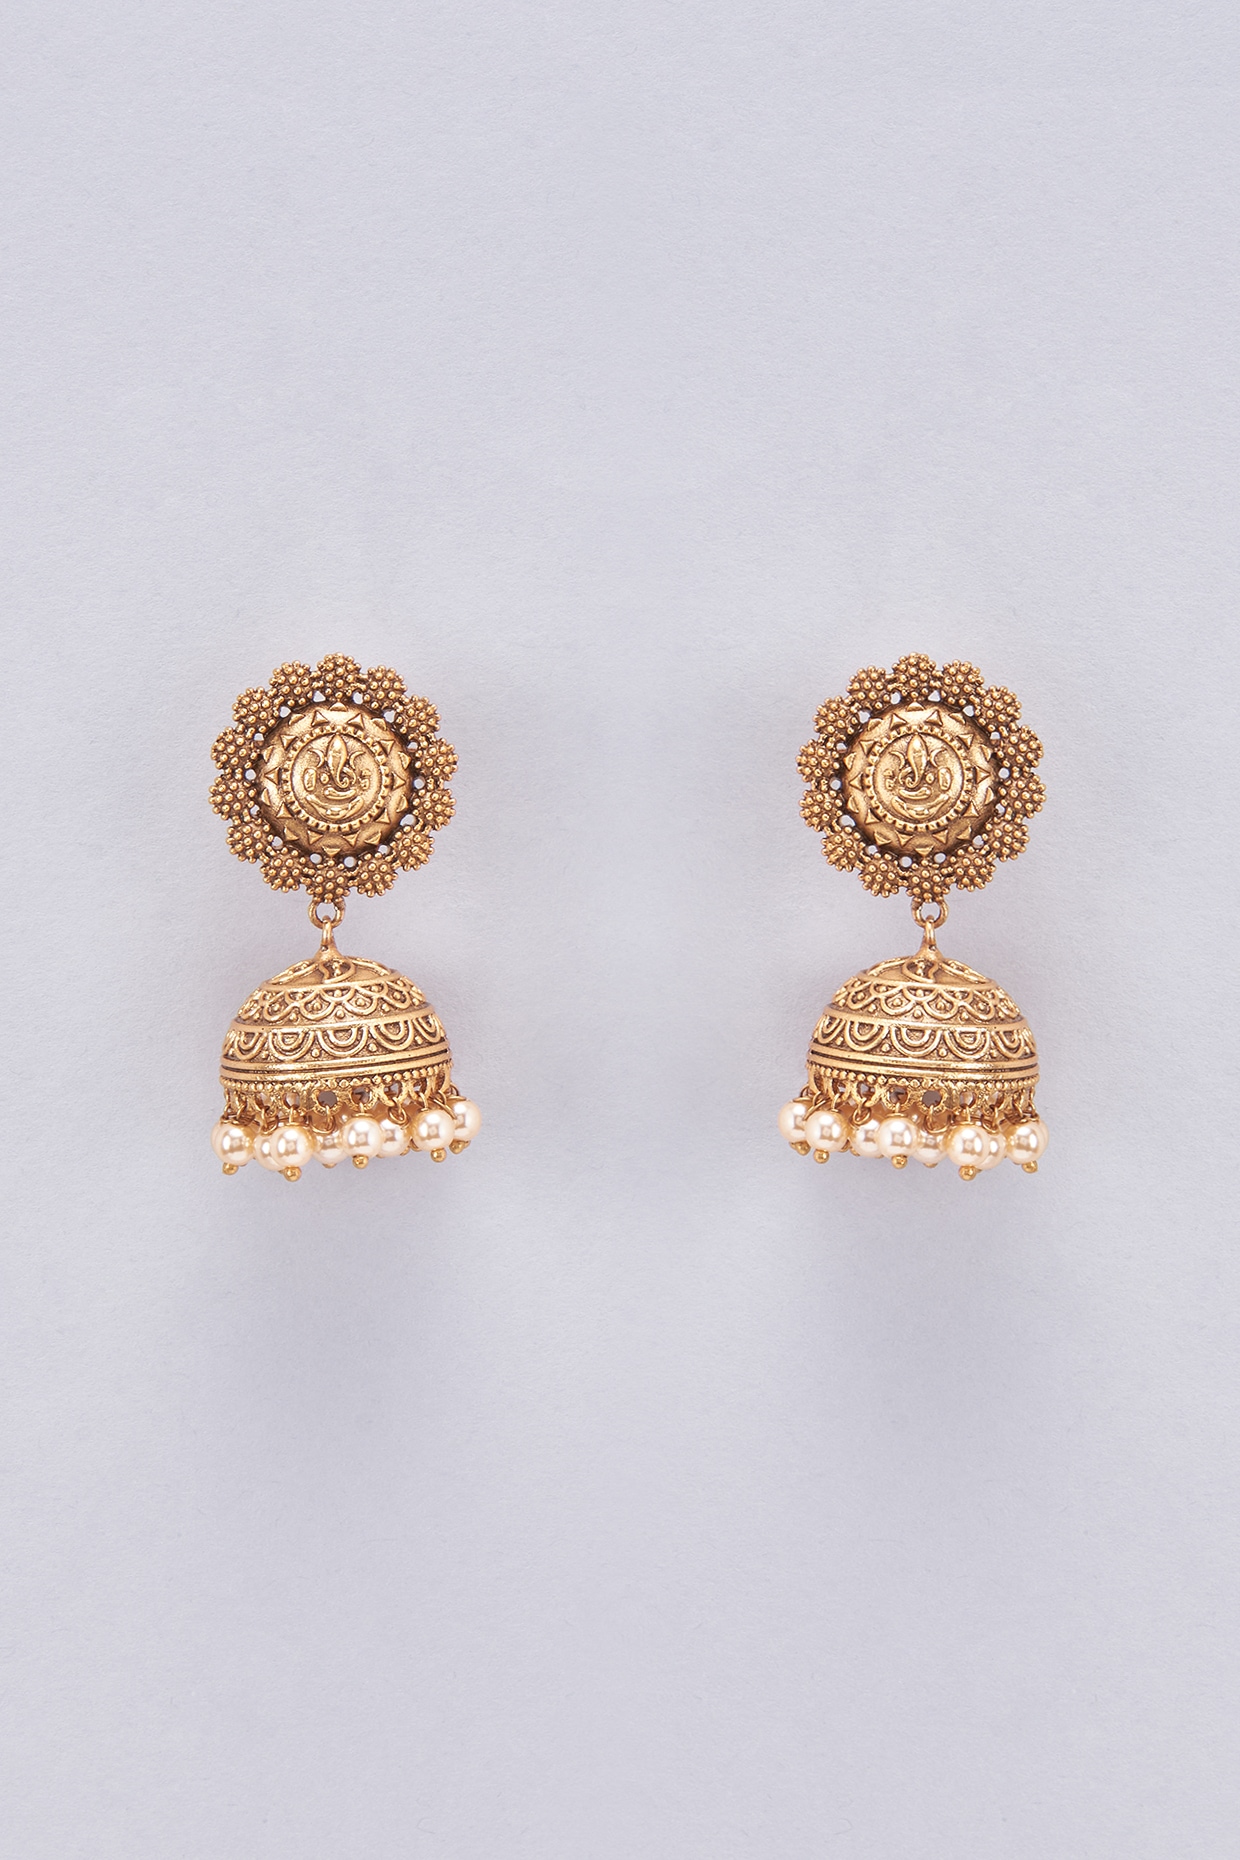 Buy Antique Gold Jhumka /earrings Temple Jewelry / Dangle Drop Gold Jhumkas  / Antique Peacock Jhumki/indian Wedding/kundan Jhumka Online in India - Etsy